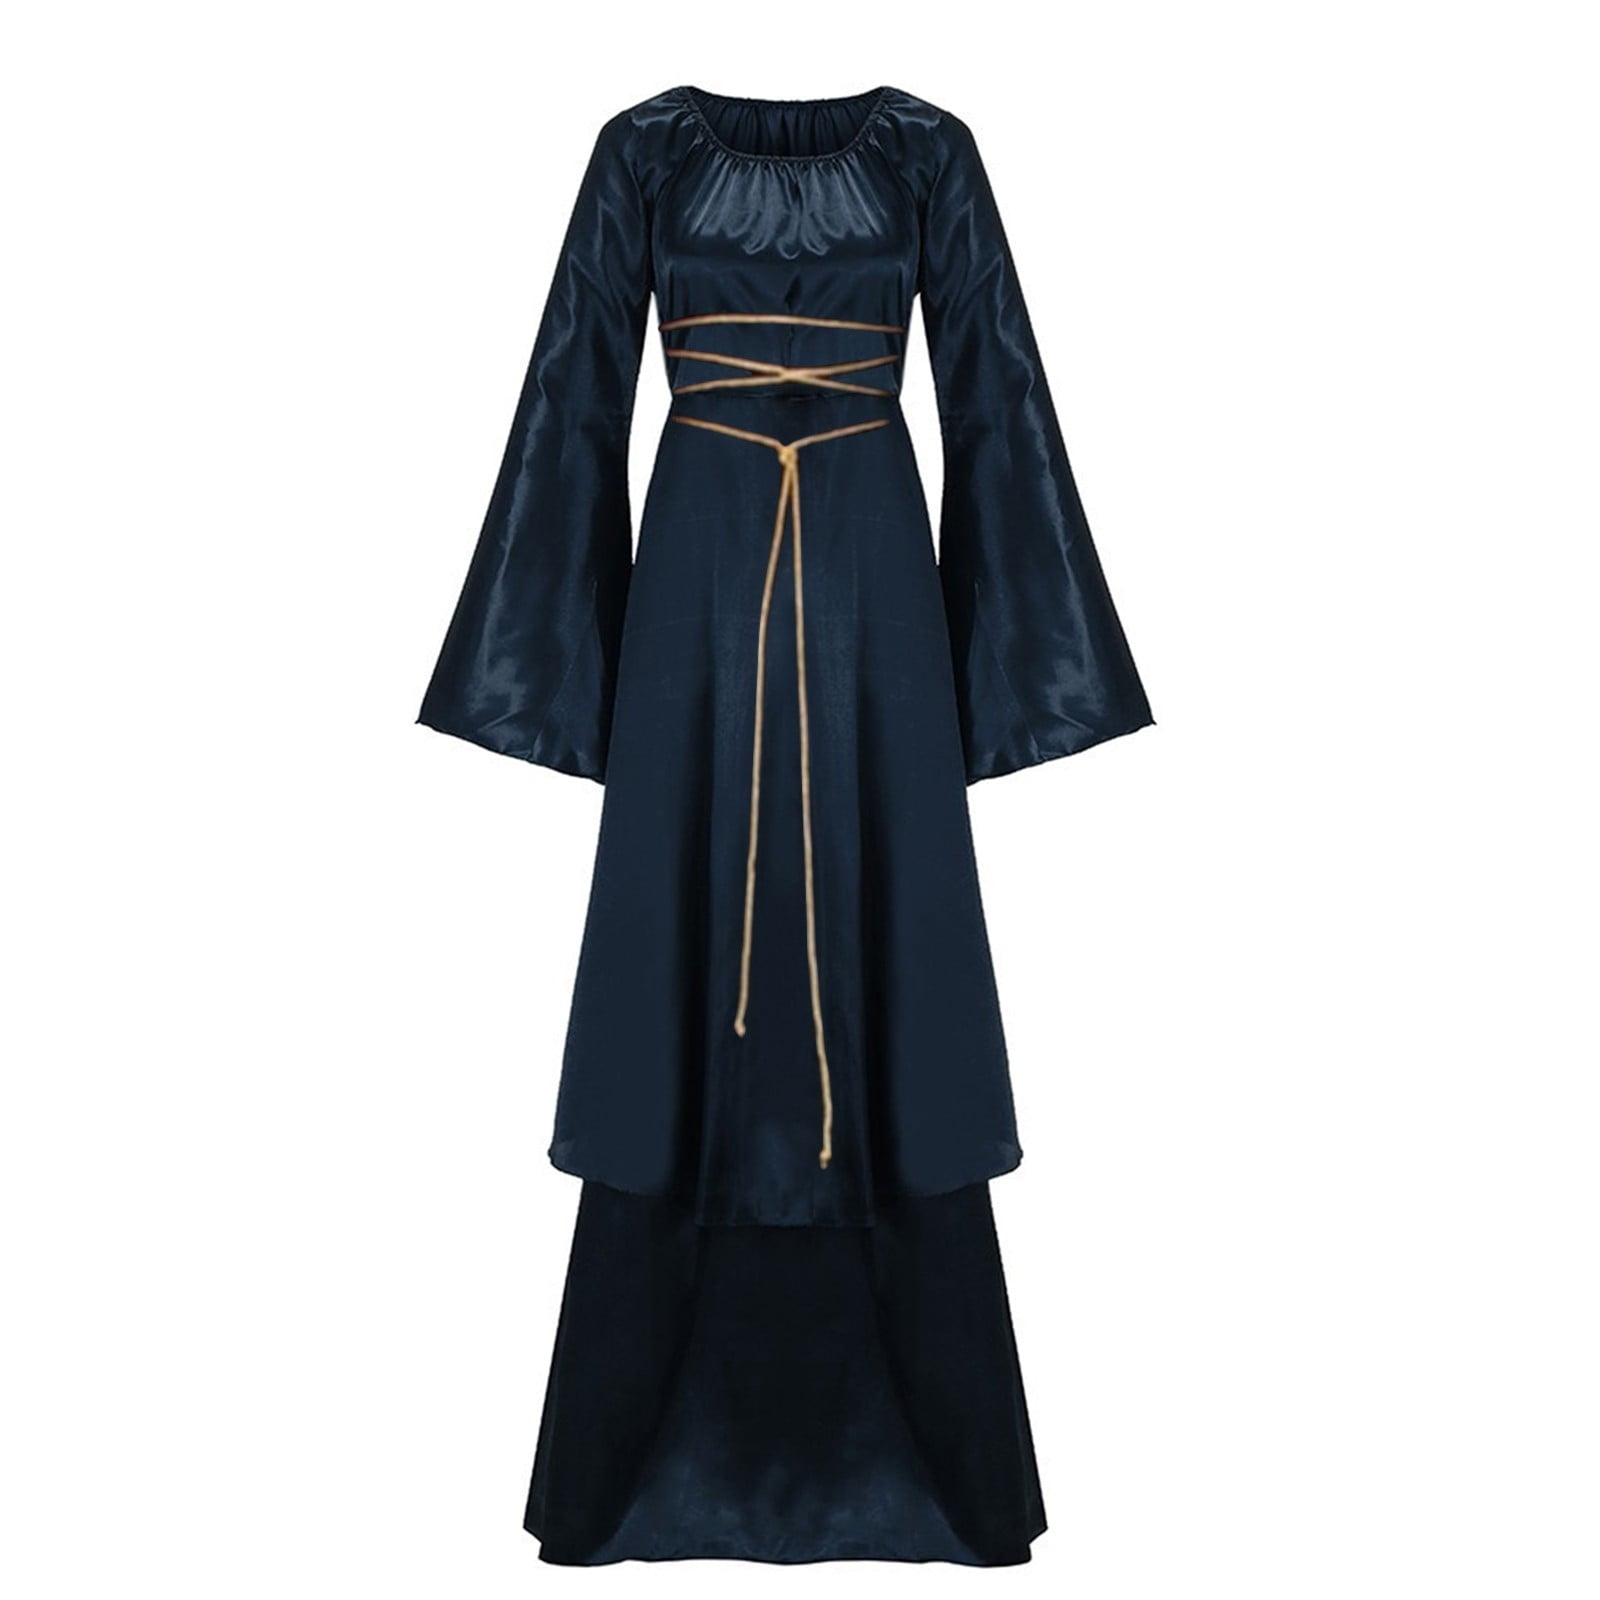 Jsaierl Women's Halloween Costumes Plus Size Retro Renaissance Dresses  Gothic Irish Costumes Princess Medieval Dresses 